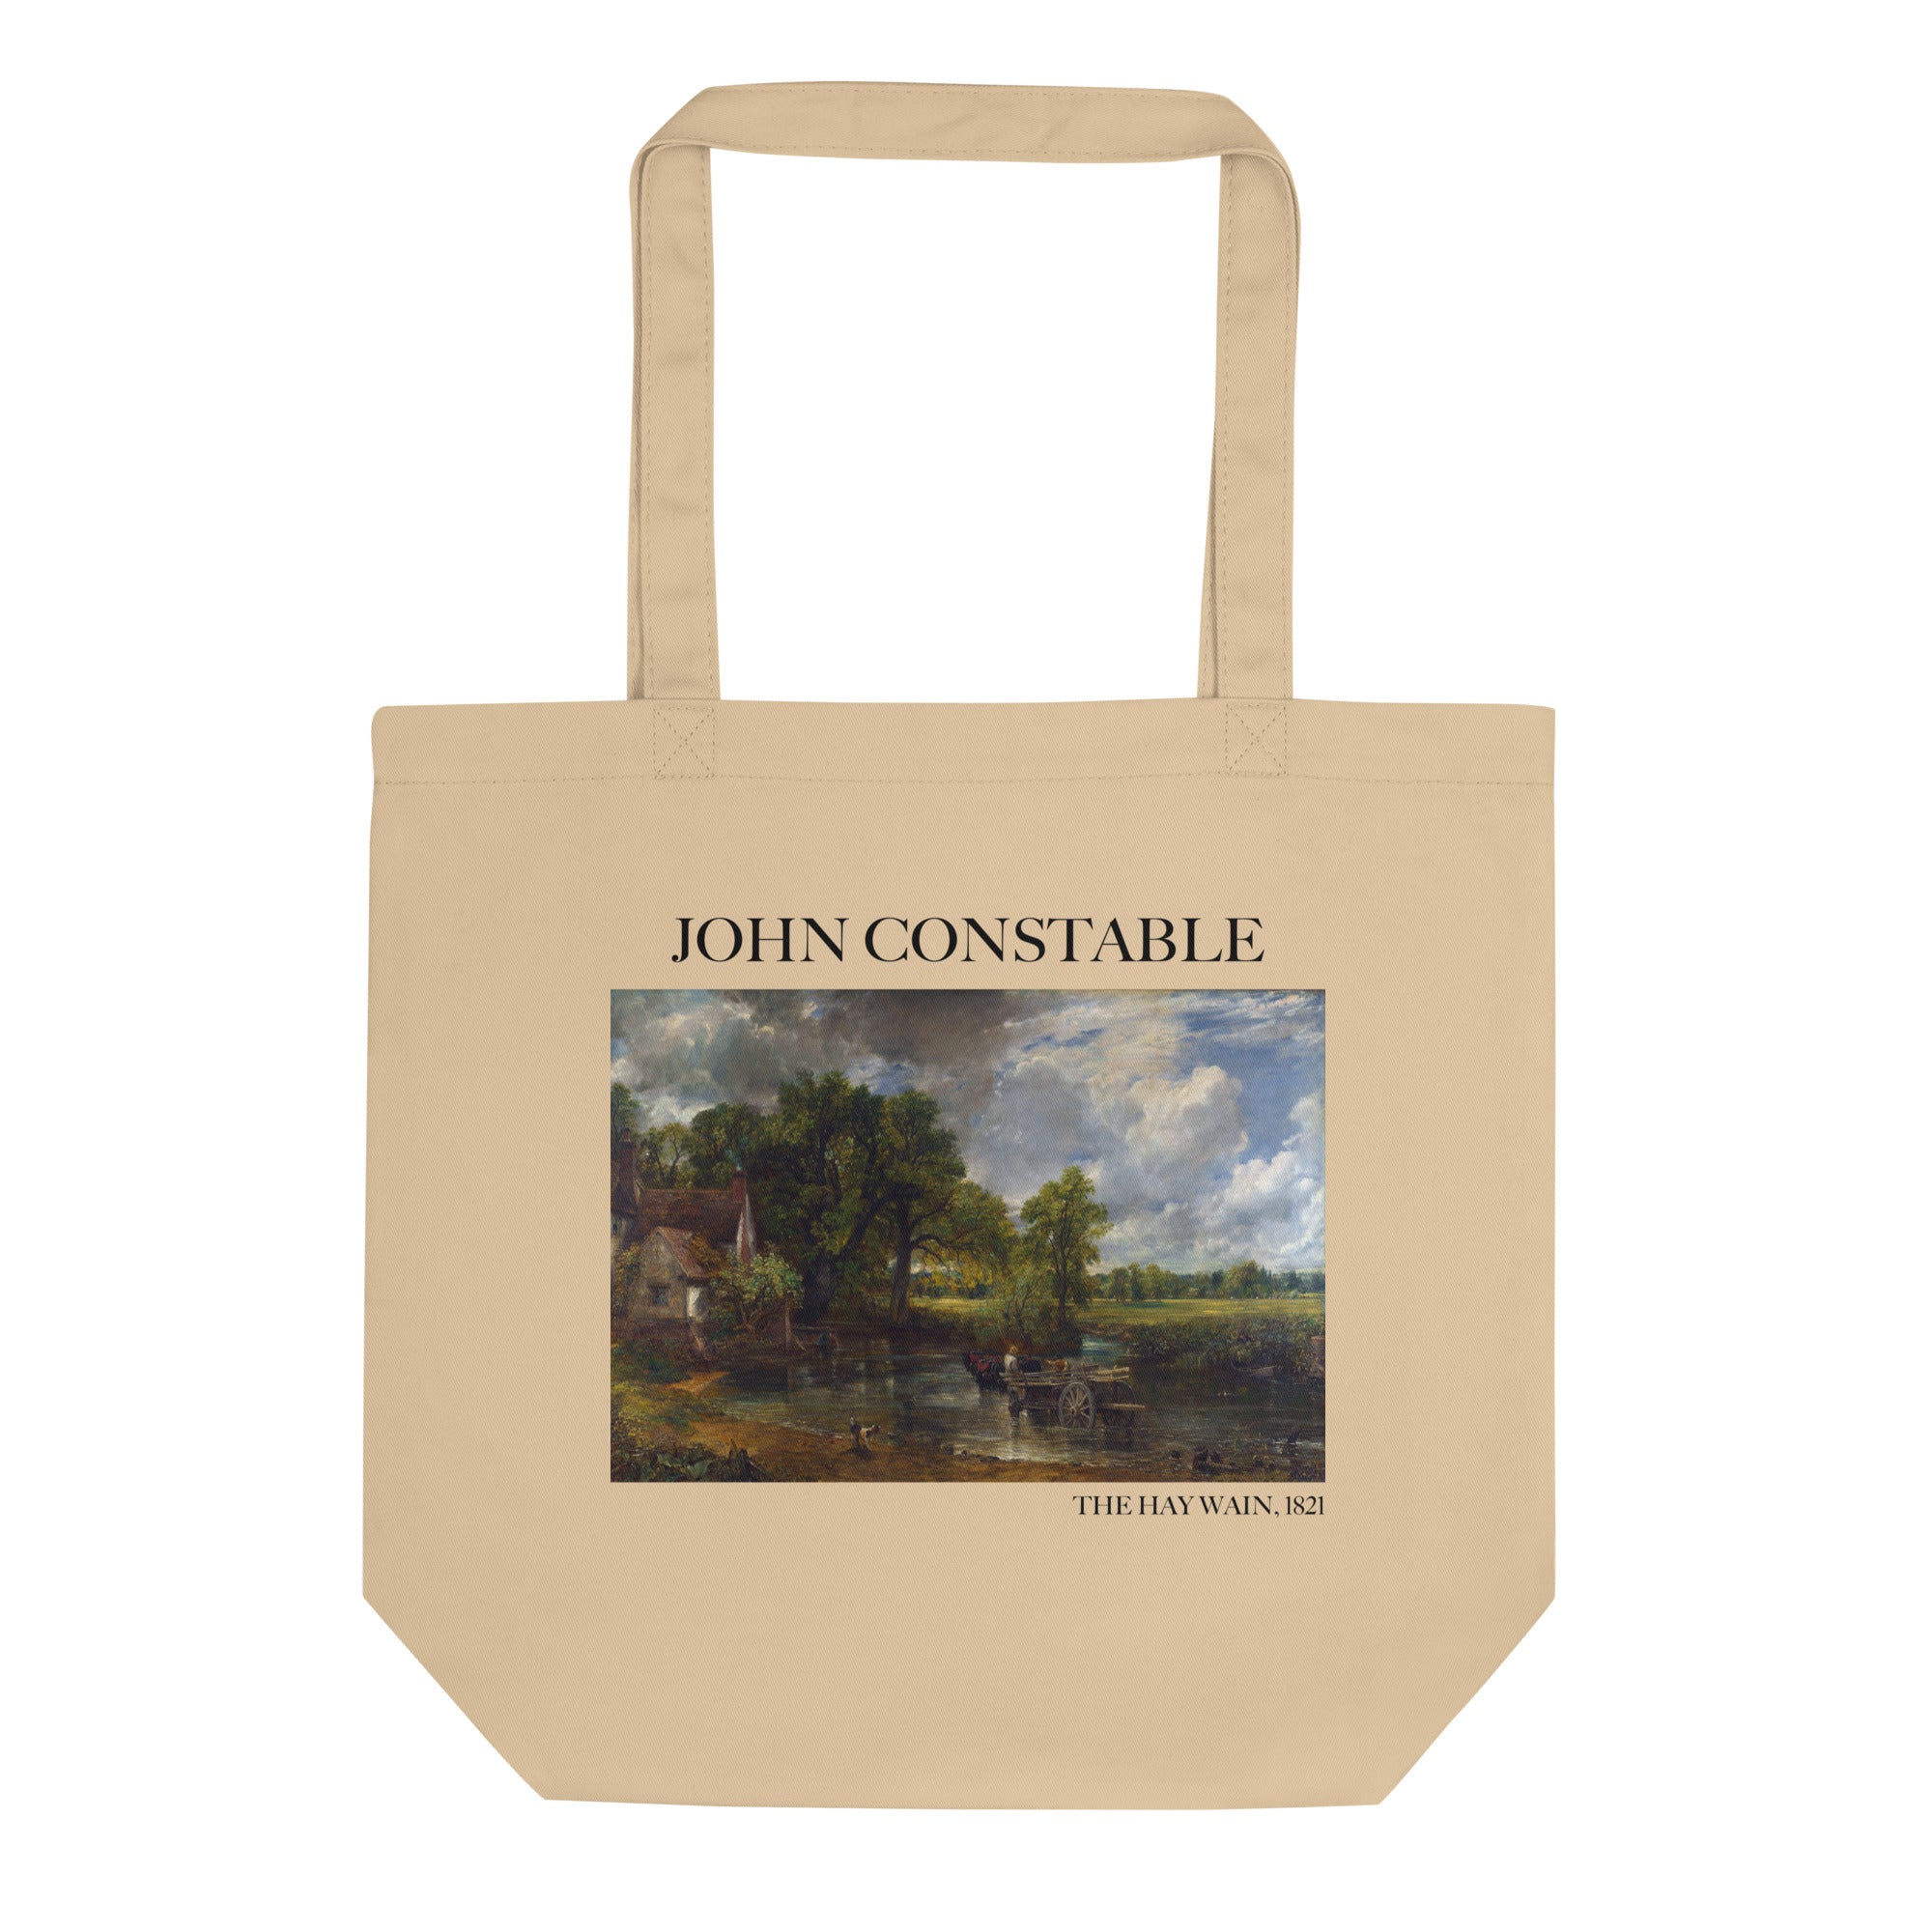 John Constable 'The Hay Wain' Famous Painting Totebag | Eco Friendly Art Tote Bag